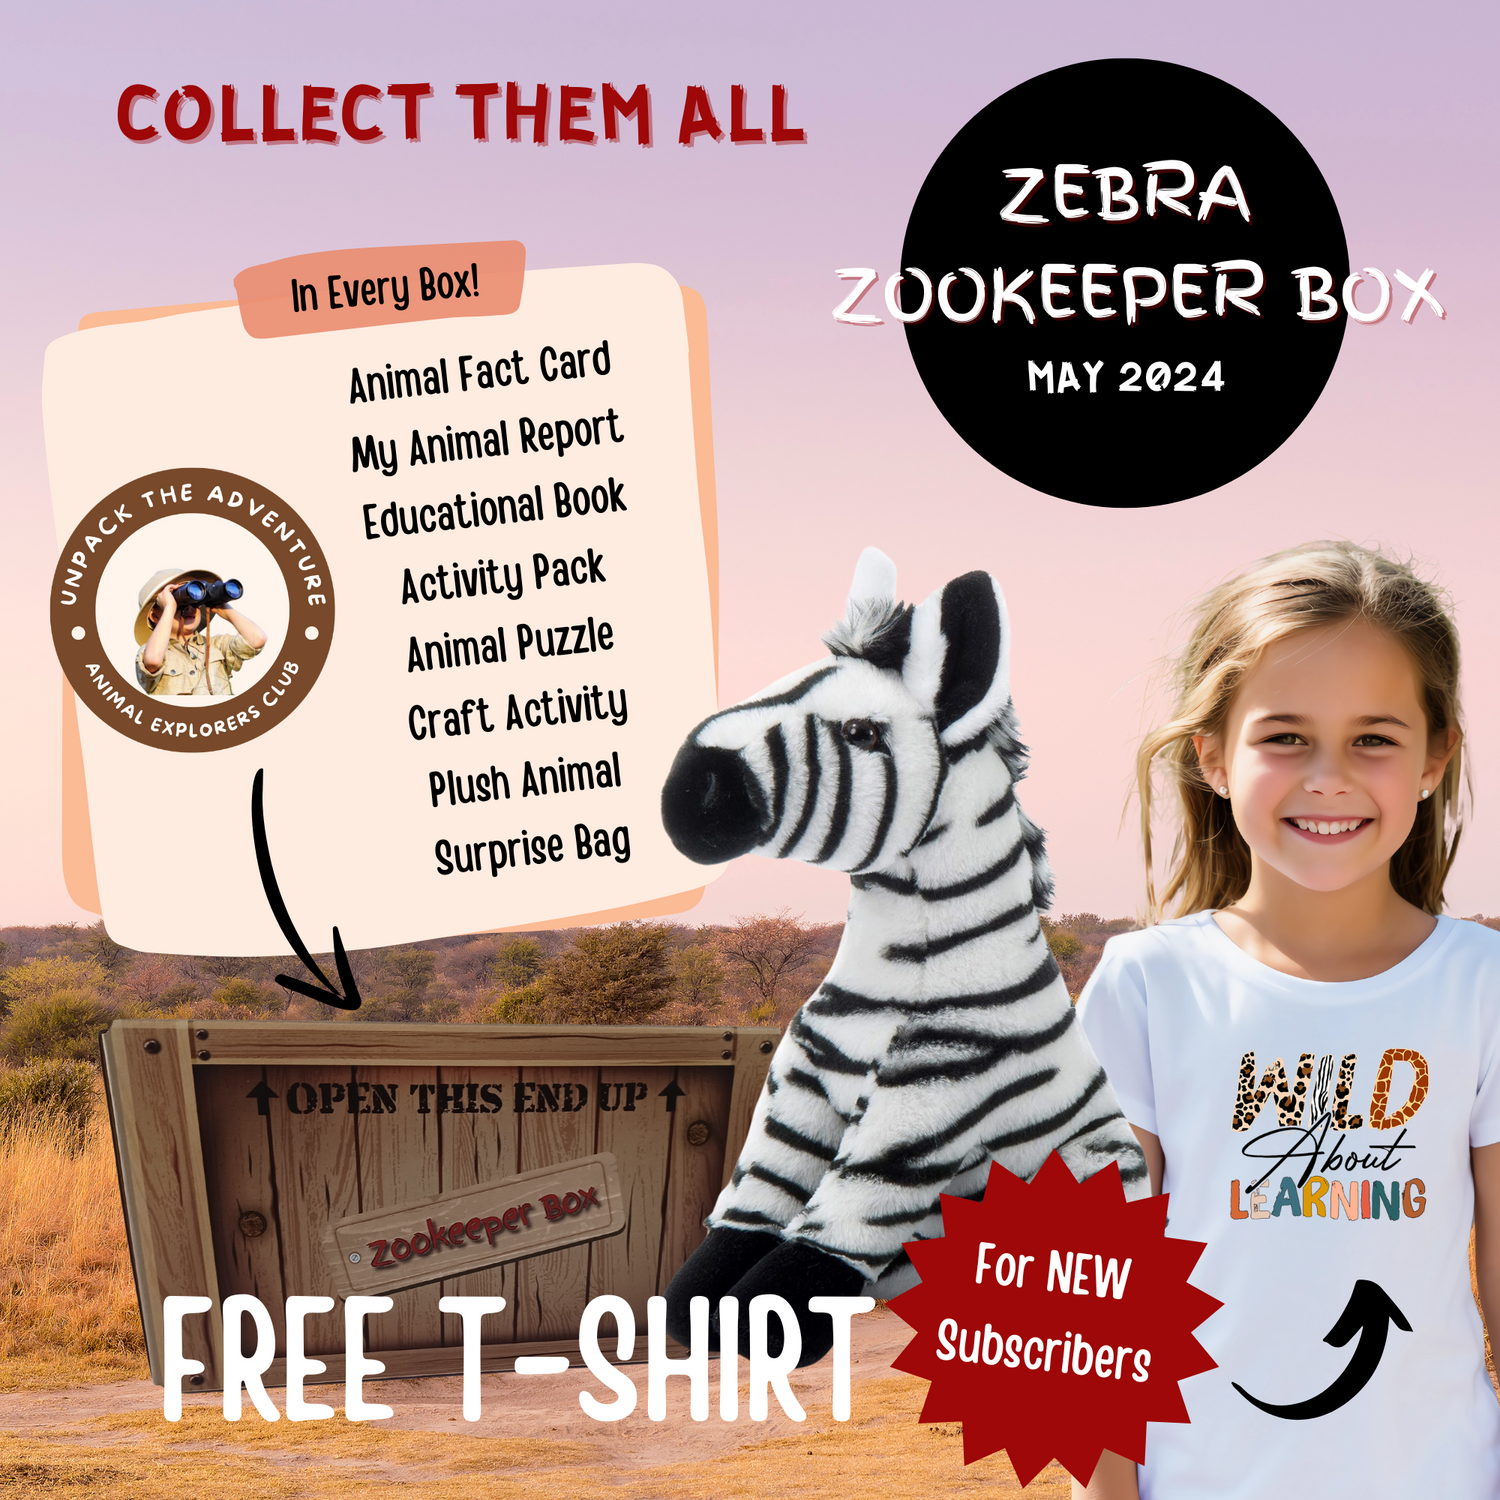 Zebra Zookeeper Box Free Shirt.png__PID:7cea10ac-da4d-483e-a6ff-e68e7d68de0b